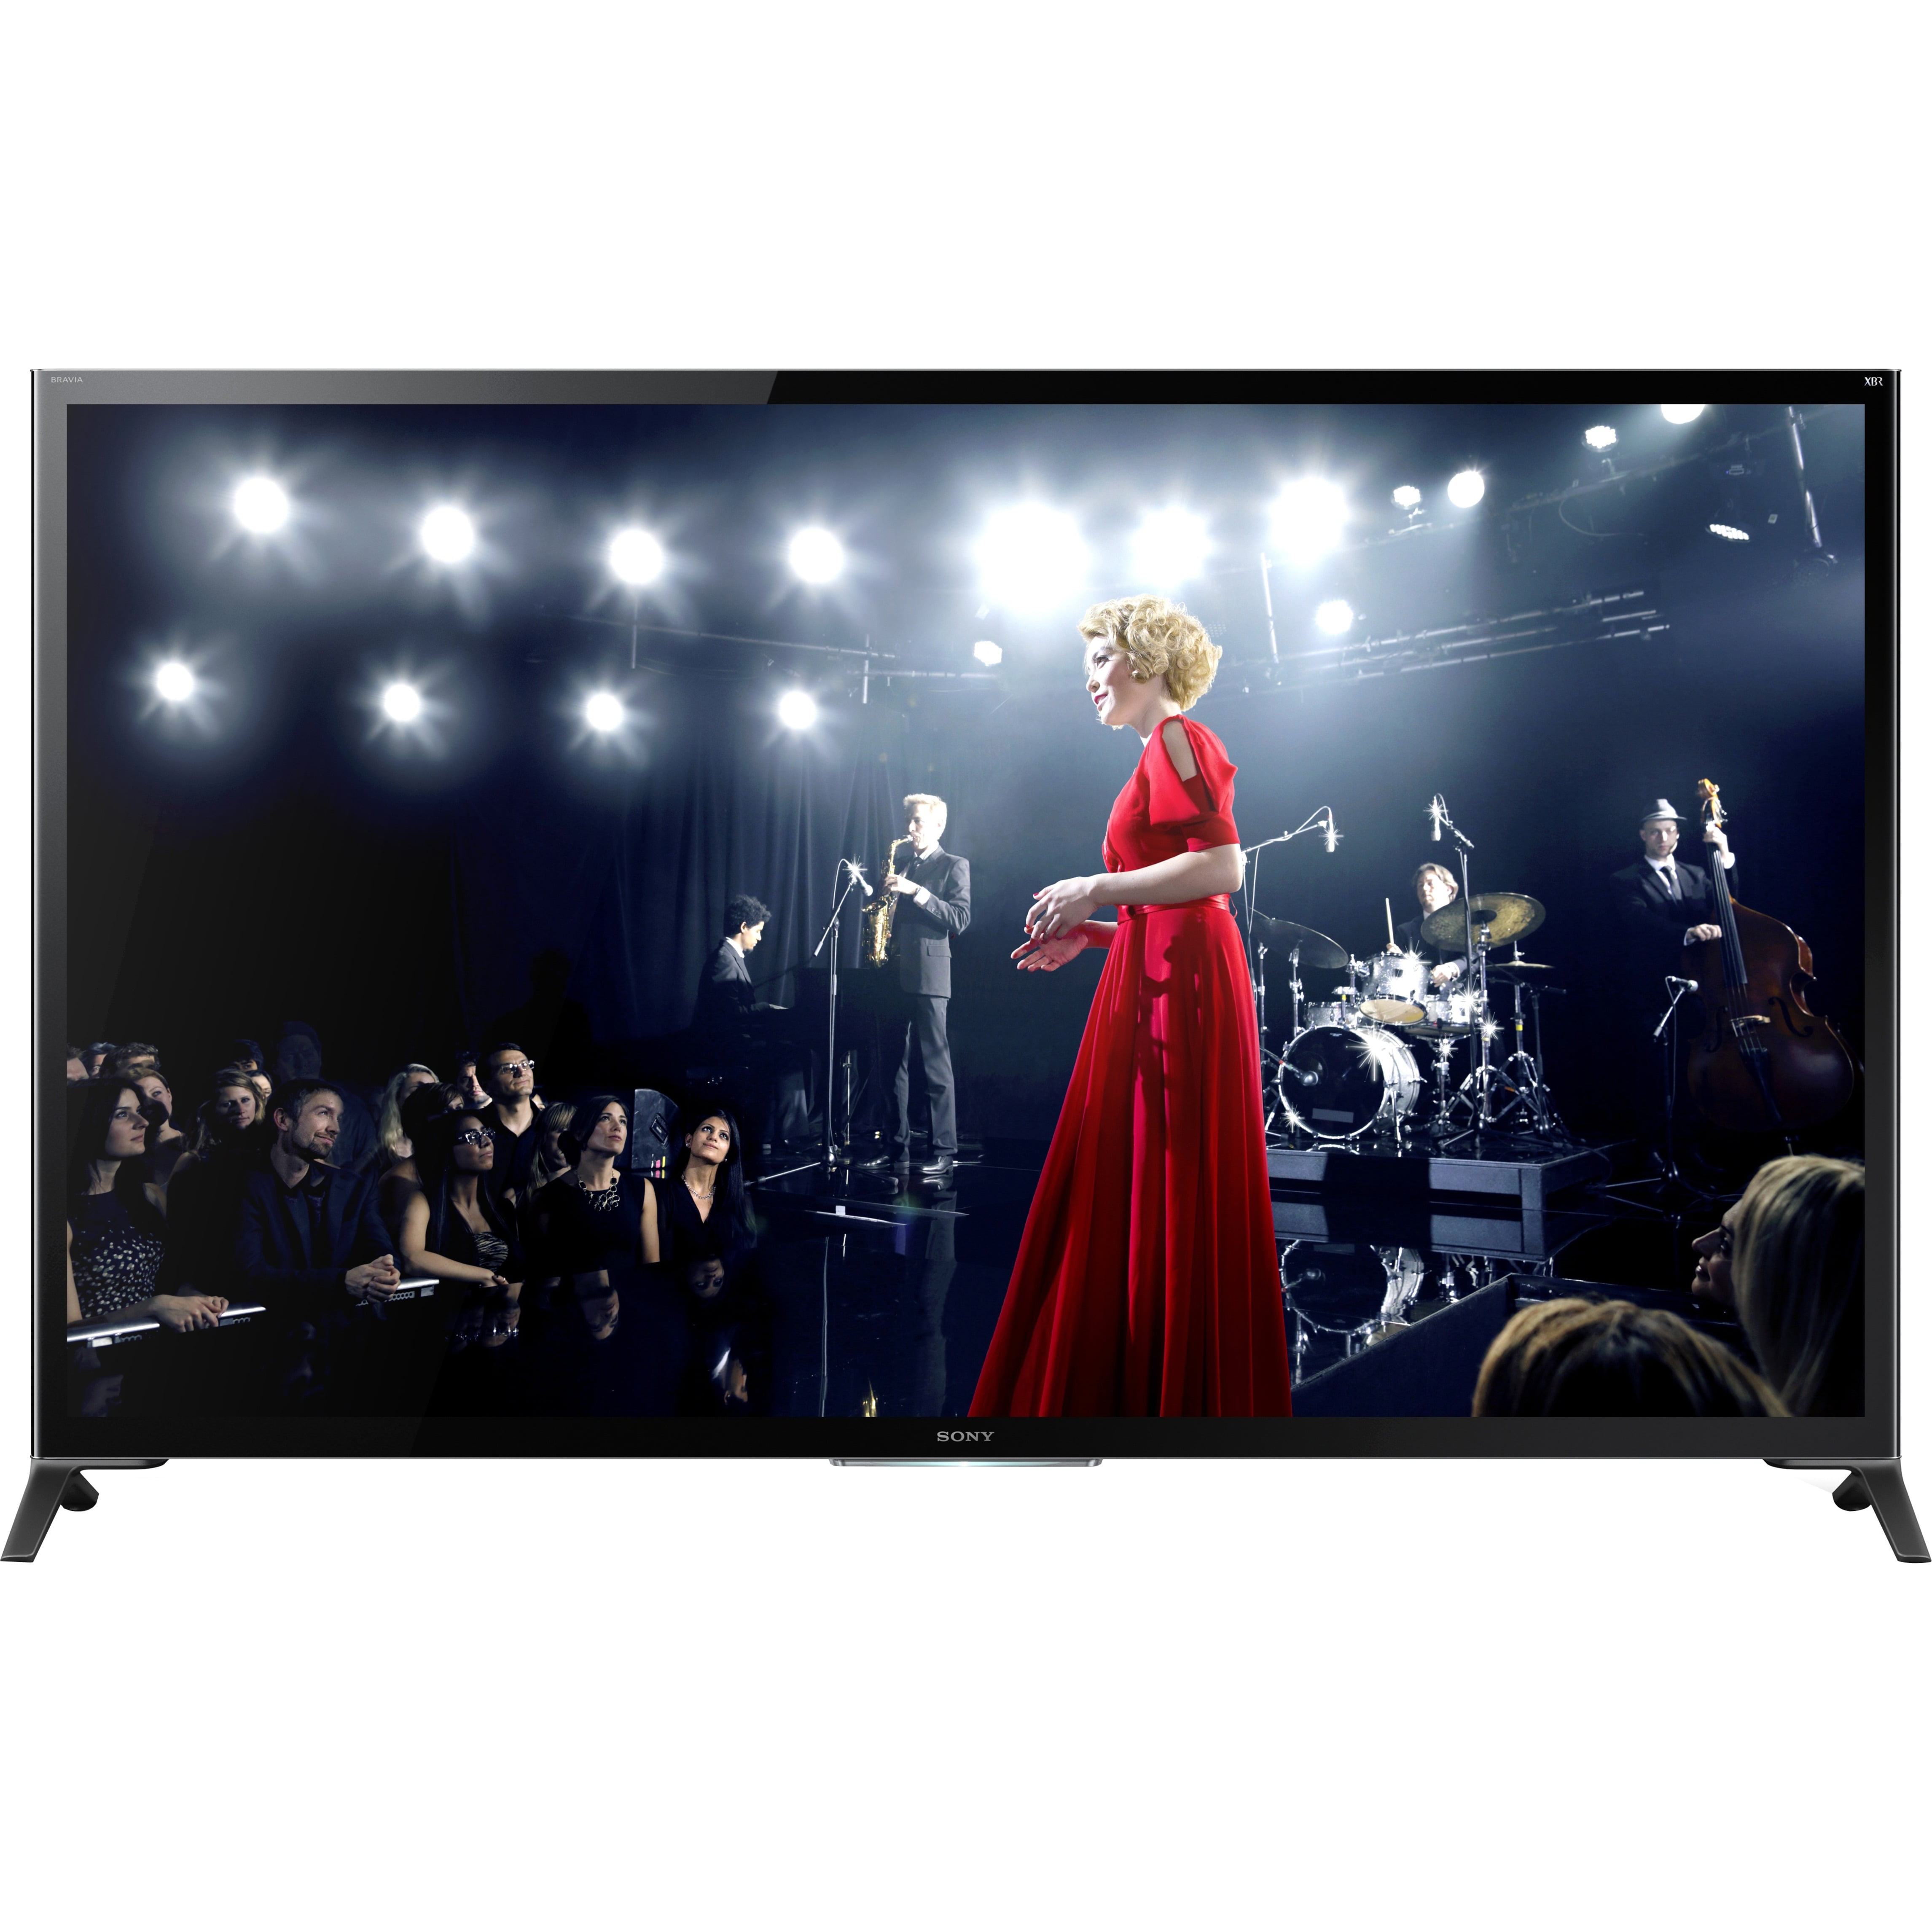 Siempre Adelante Trivial Sony 65" Class 4K UHDTV (2160p) Smart LED-LCD TV (XBR-65X950B) - Walmart.com